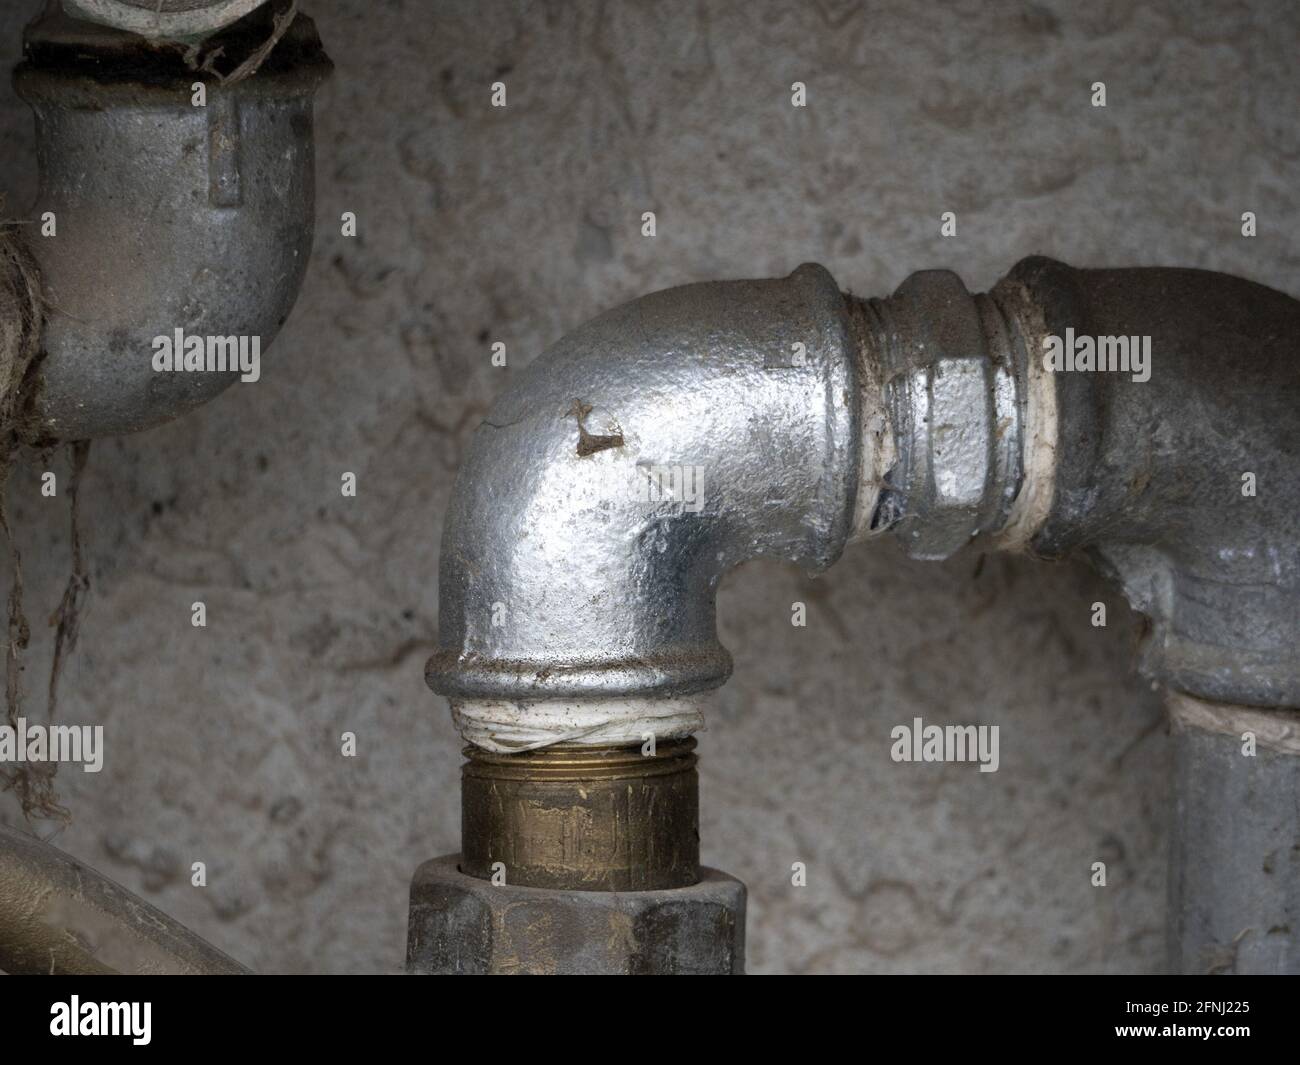 old gas metan pèipe valve detail close up Stock Photo